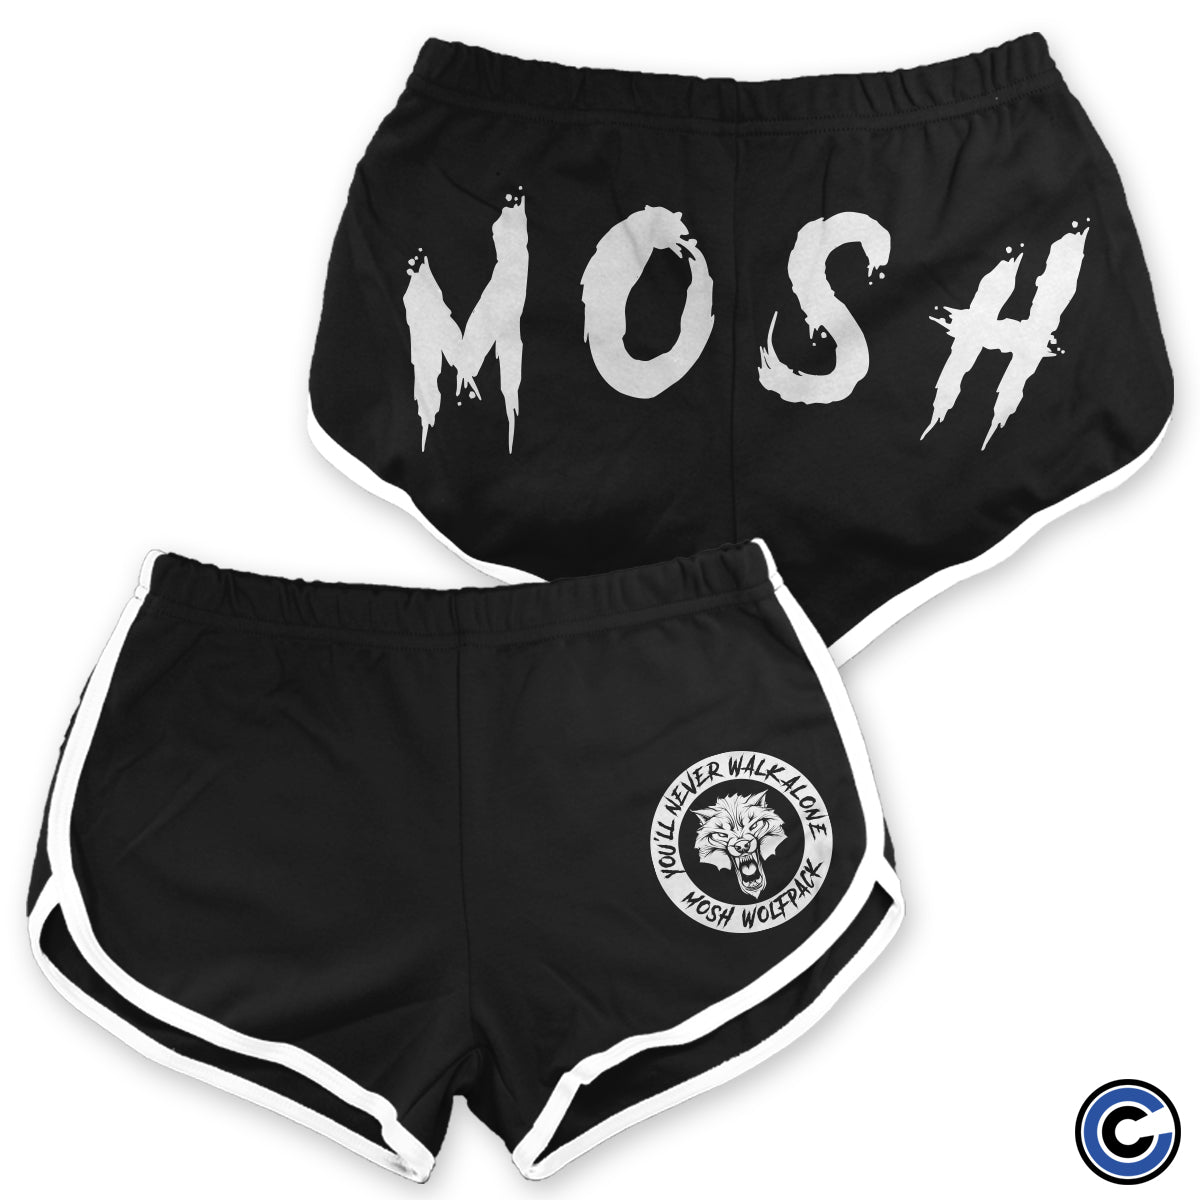 Mosh It Up "Mosh Wolfpack" Track Shorts